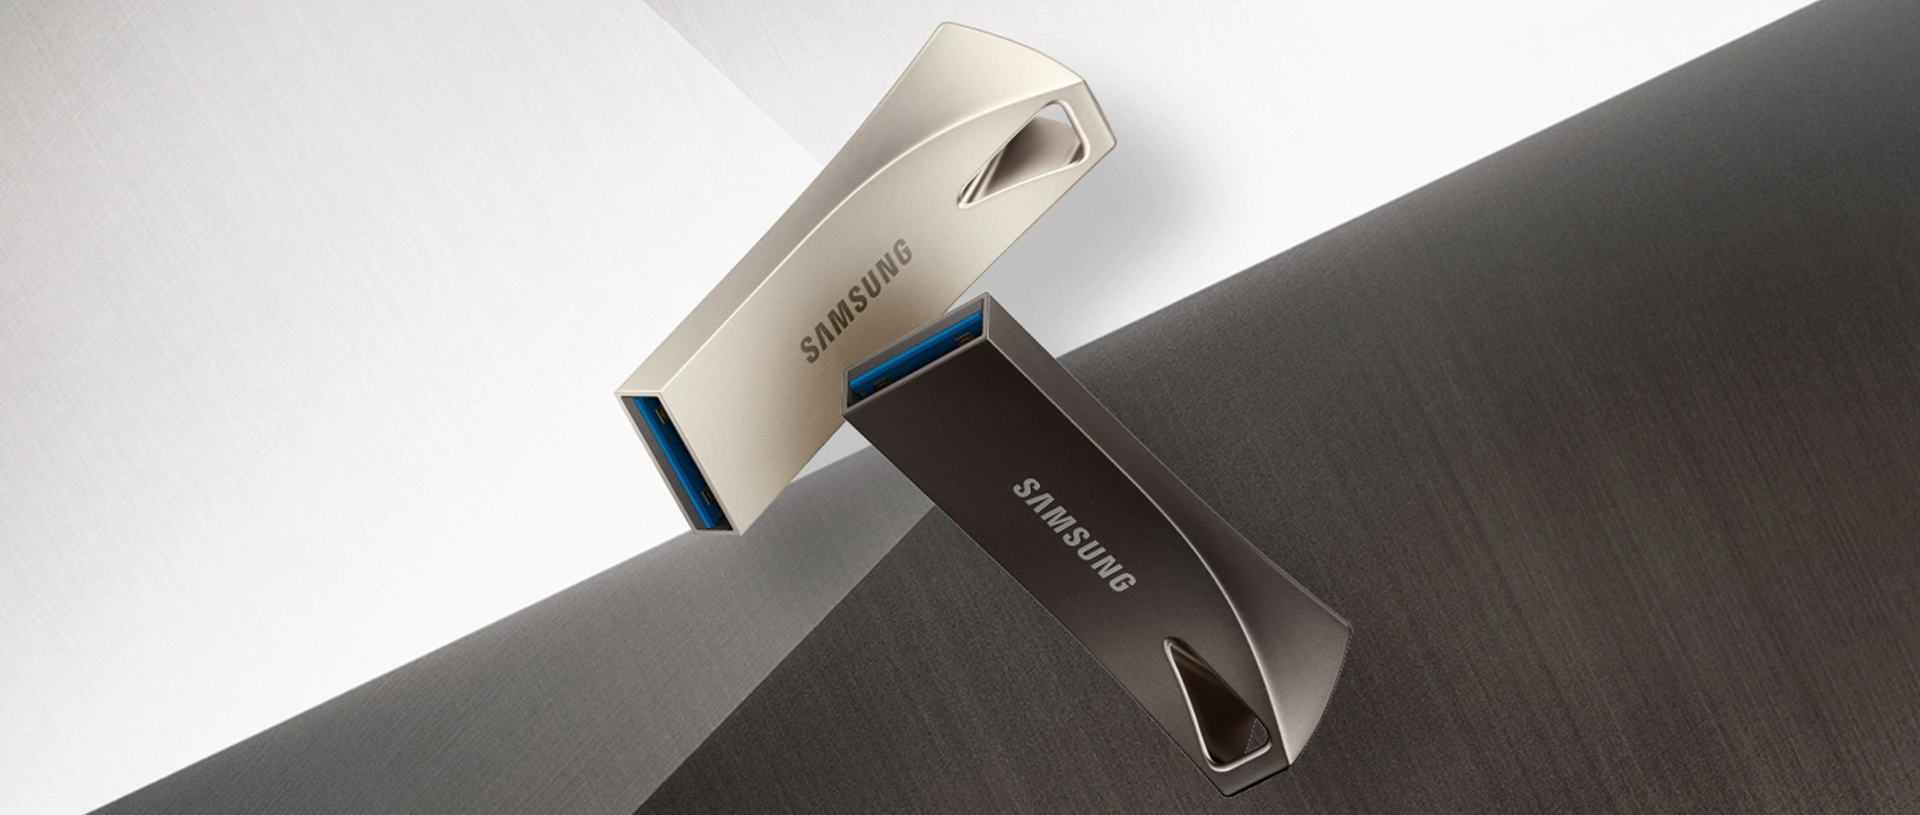 Samsung Bar Plus - сінергія швидкості та стилю